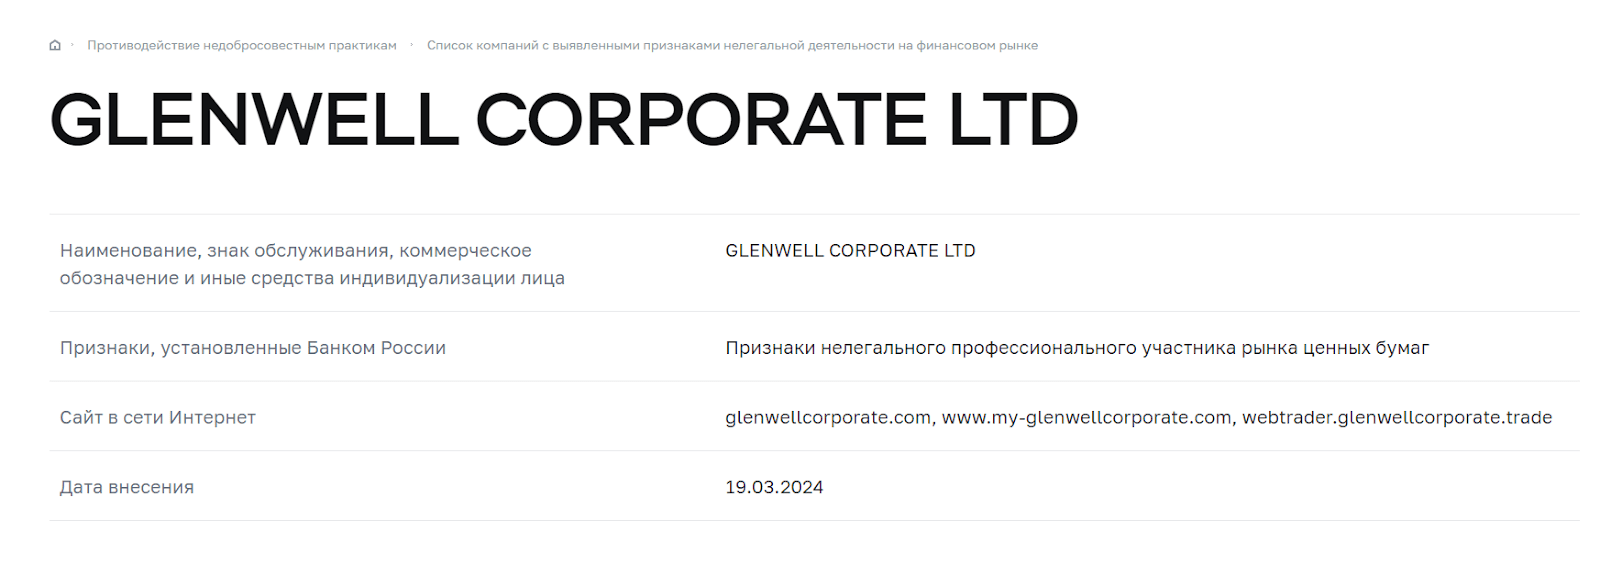 glenwell corporate ltd польша отзывы